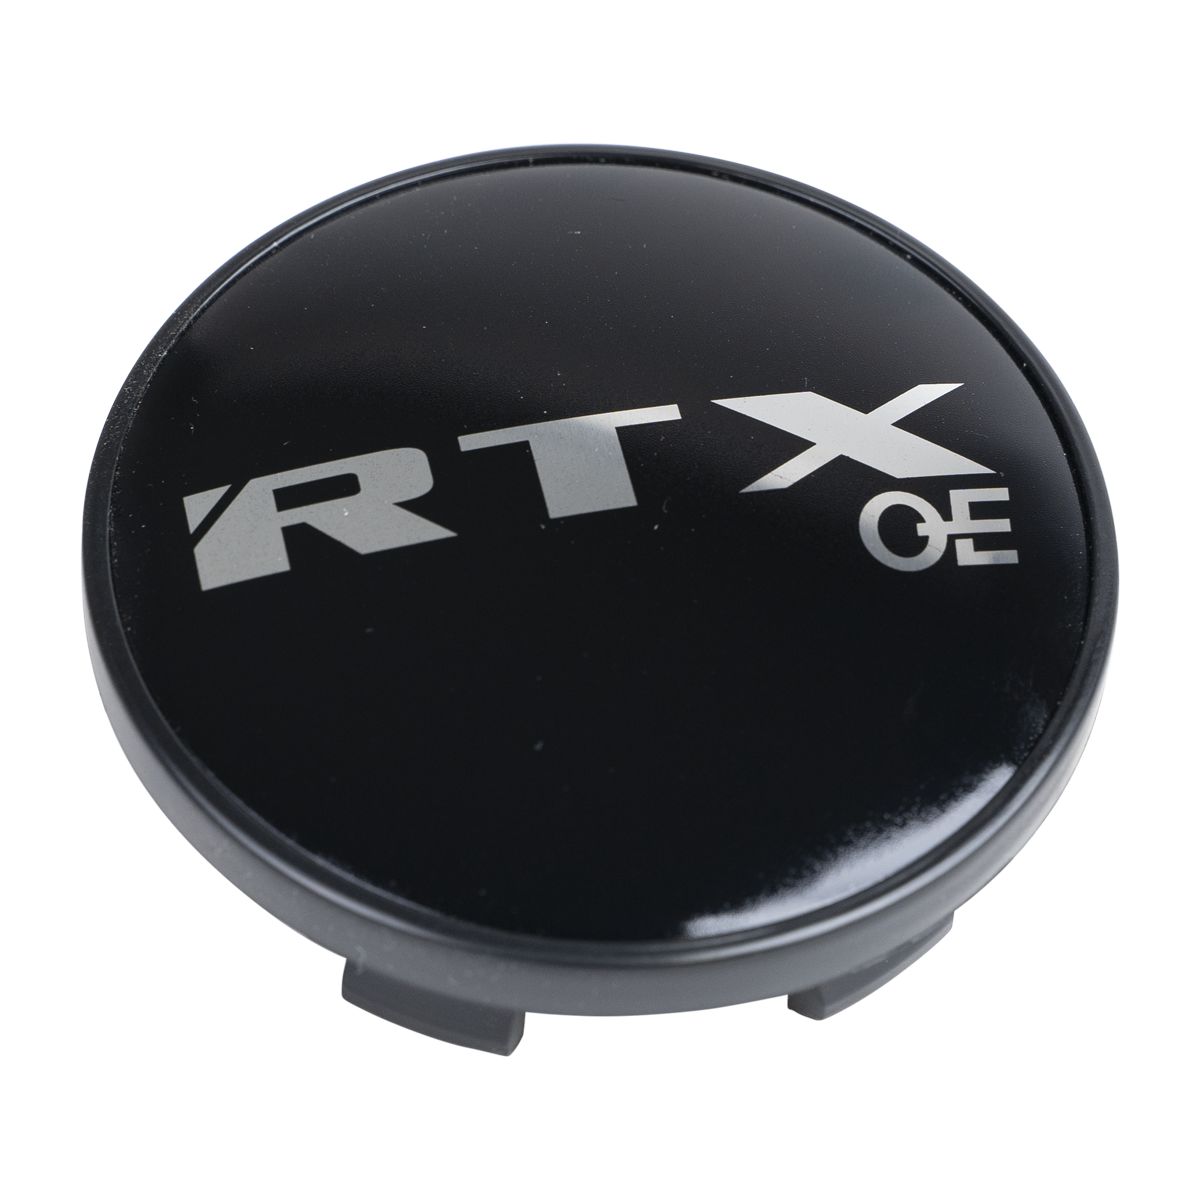 RTX BC007BRTXOEB - Center Cap Black with RTXoe Chrome with Black Background